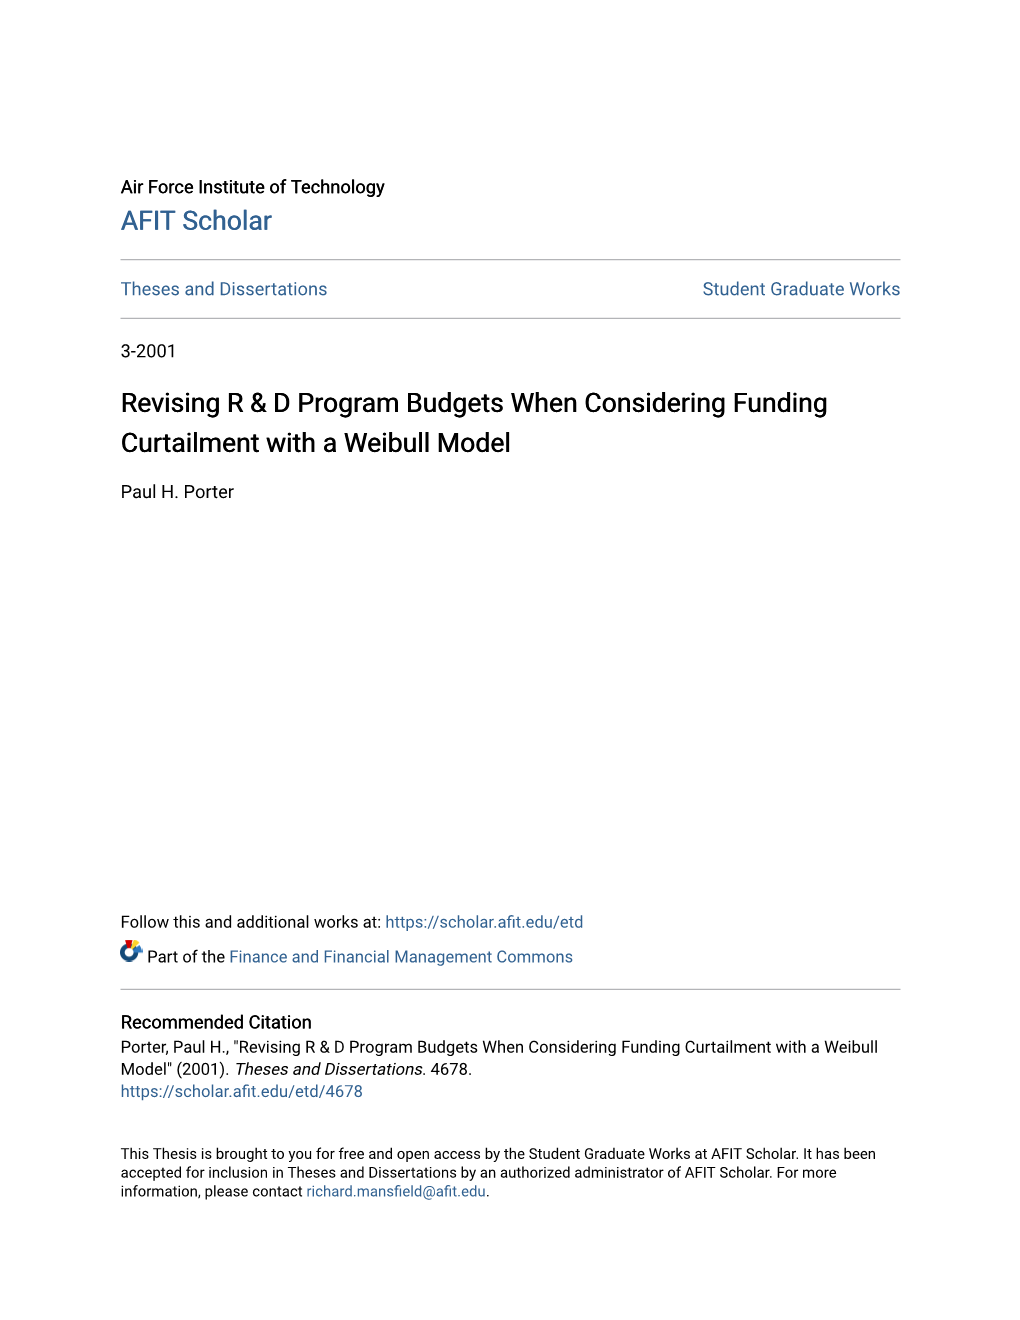 Revising R & D Program Budgets When Considering Funding